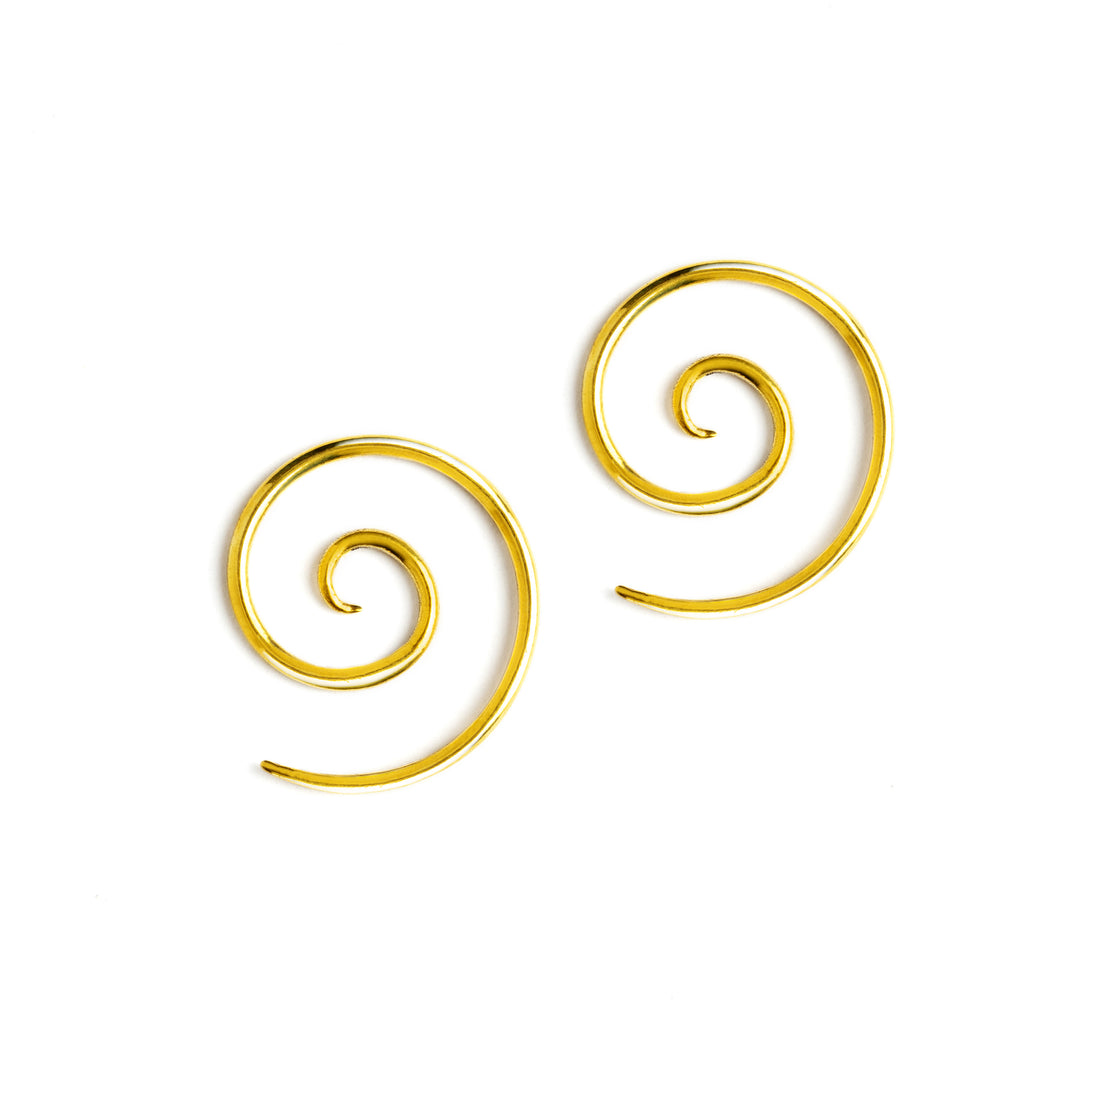 pair of golden brass spiral hoop earrings side view